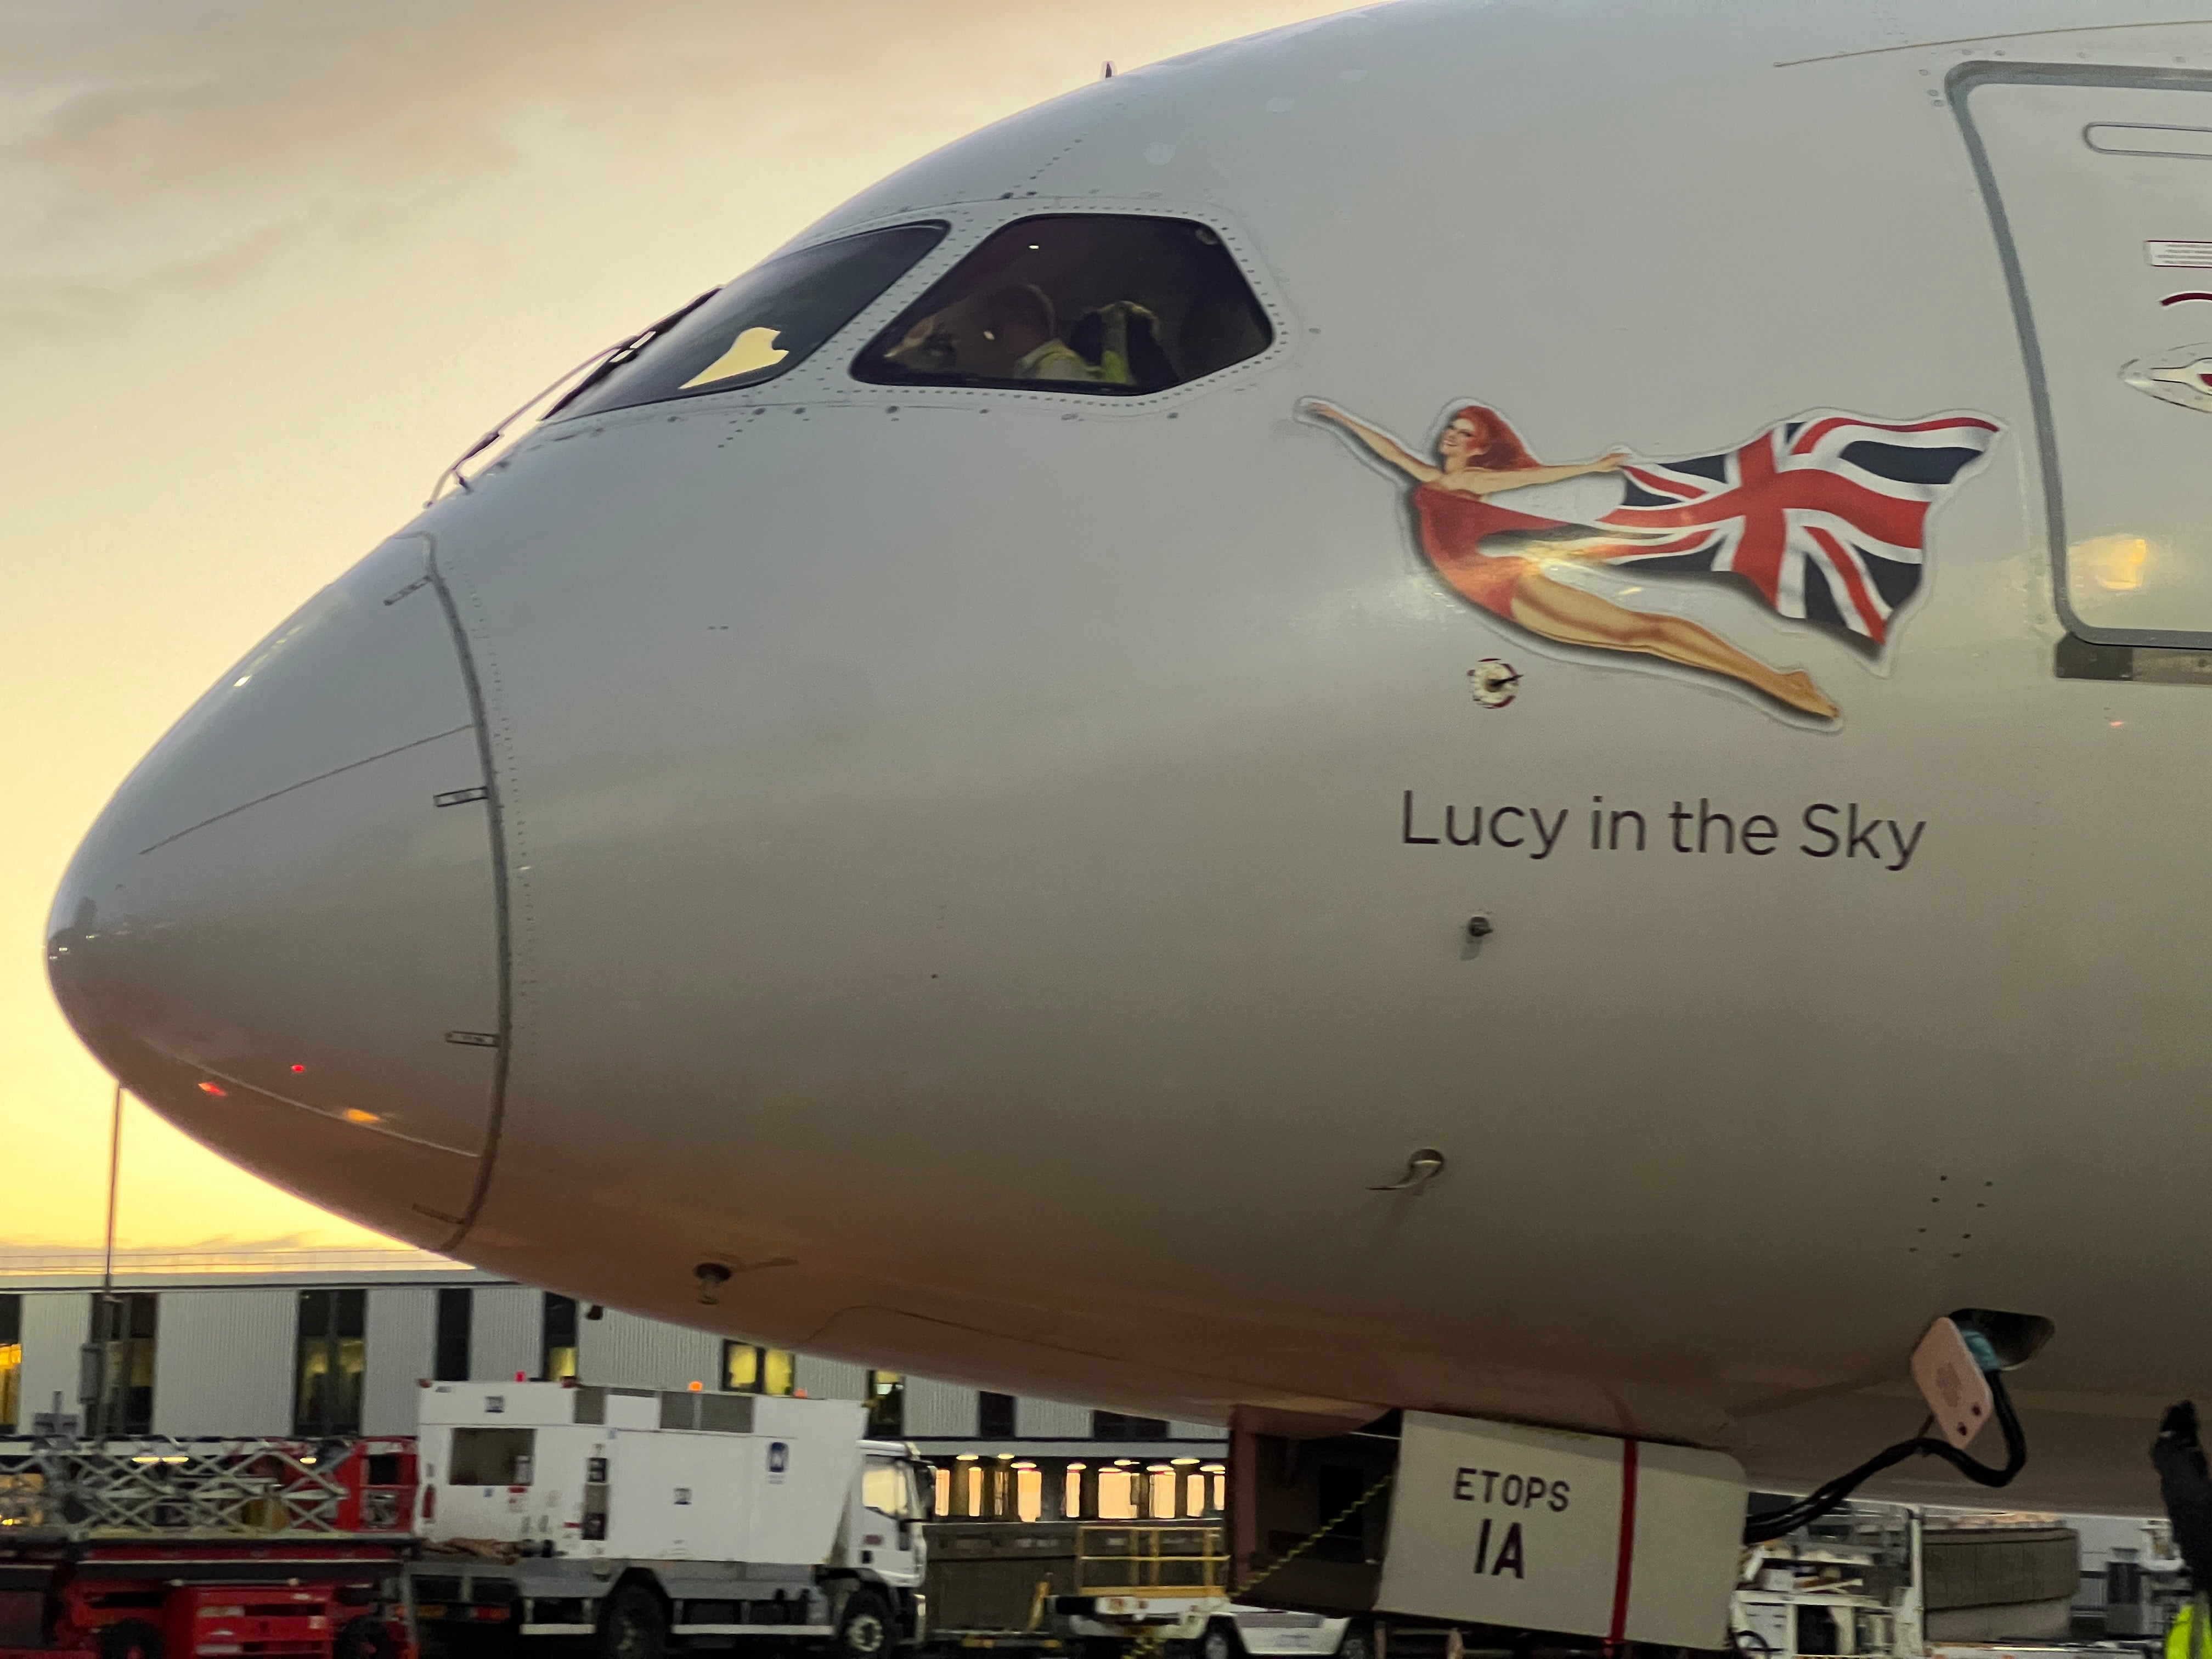 Sky gazing: Lucy in the Sky, the Virgin Atlantic Boeing 787 Dreamliner used for the first SAF transatlantic flight